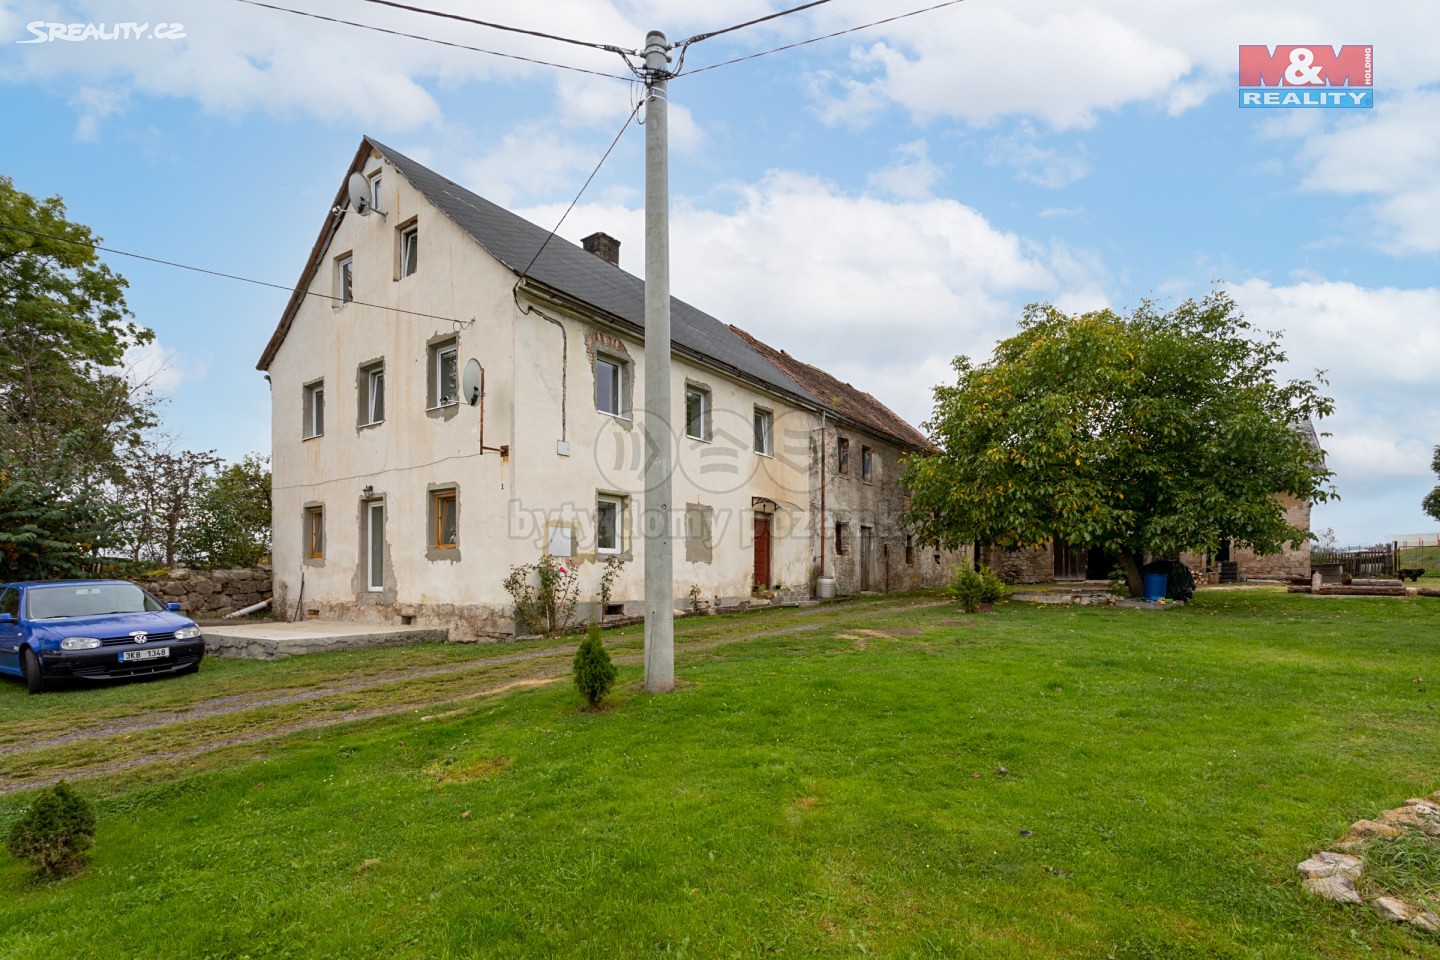 Prodej  rodinného domu 130 m², pozemek 3 384 m², Stružná - Nová Víska, okres Karlovy Vary